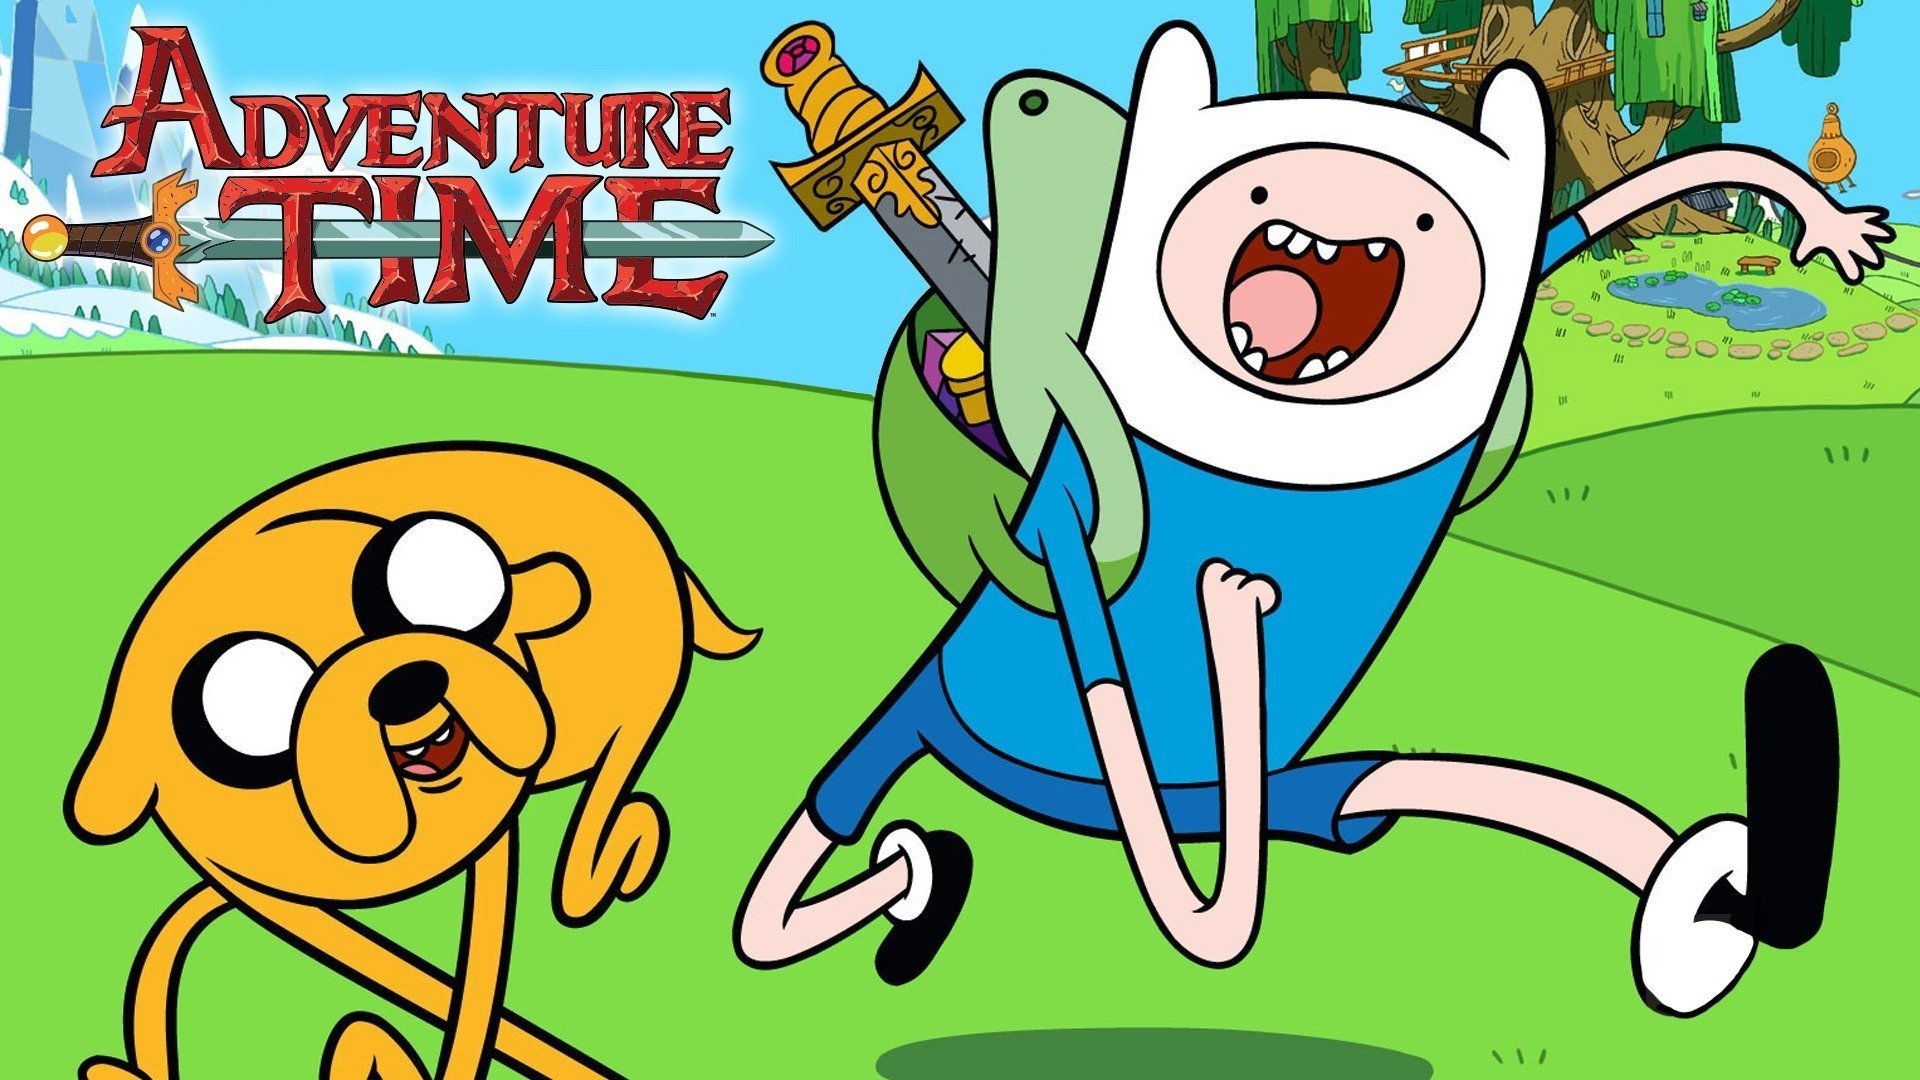 Adventure Time - Stream Episodes